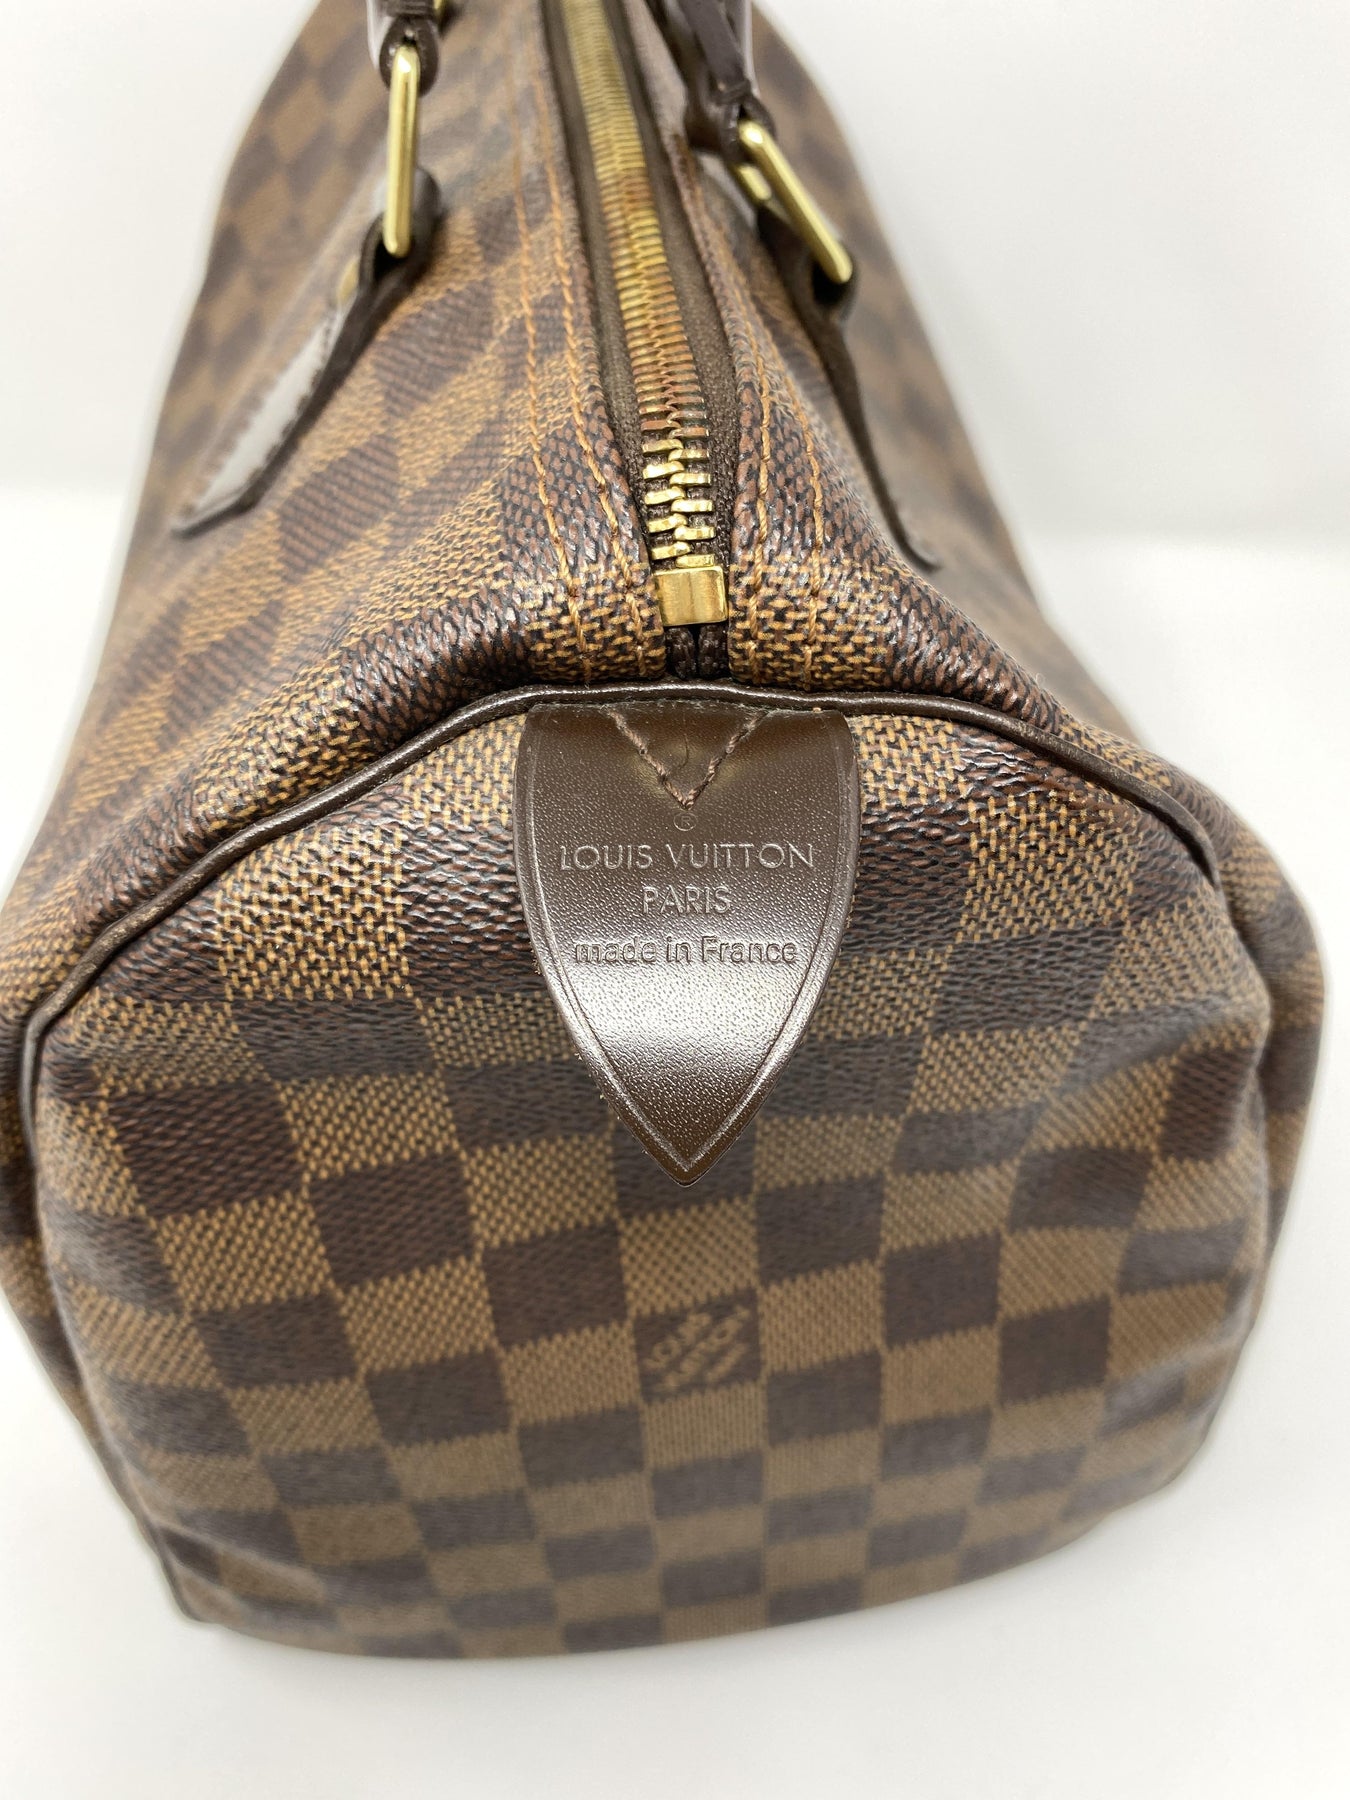 Louis Vuitton Brown Damier Azzure Canvas Speedy 35 Satchel Bag